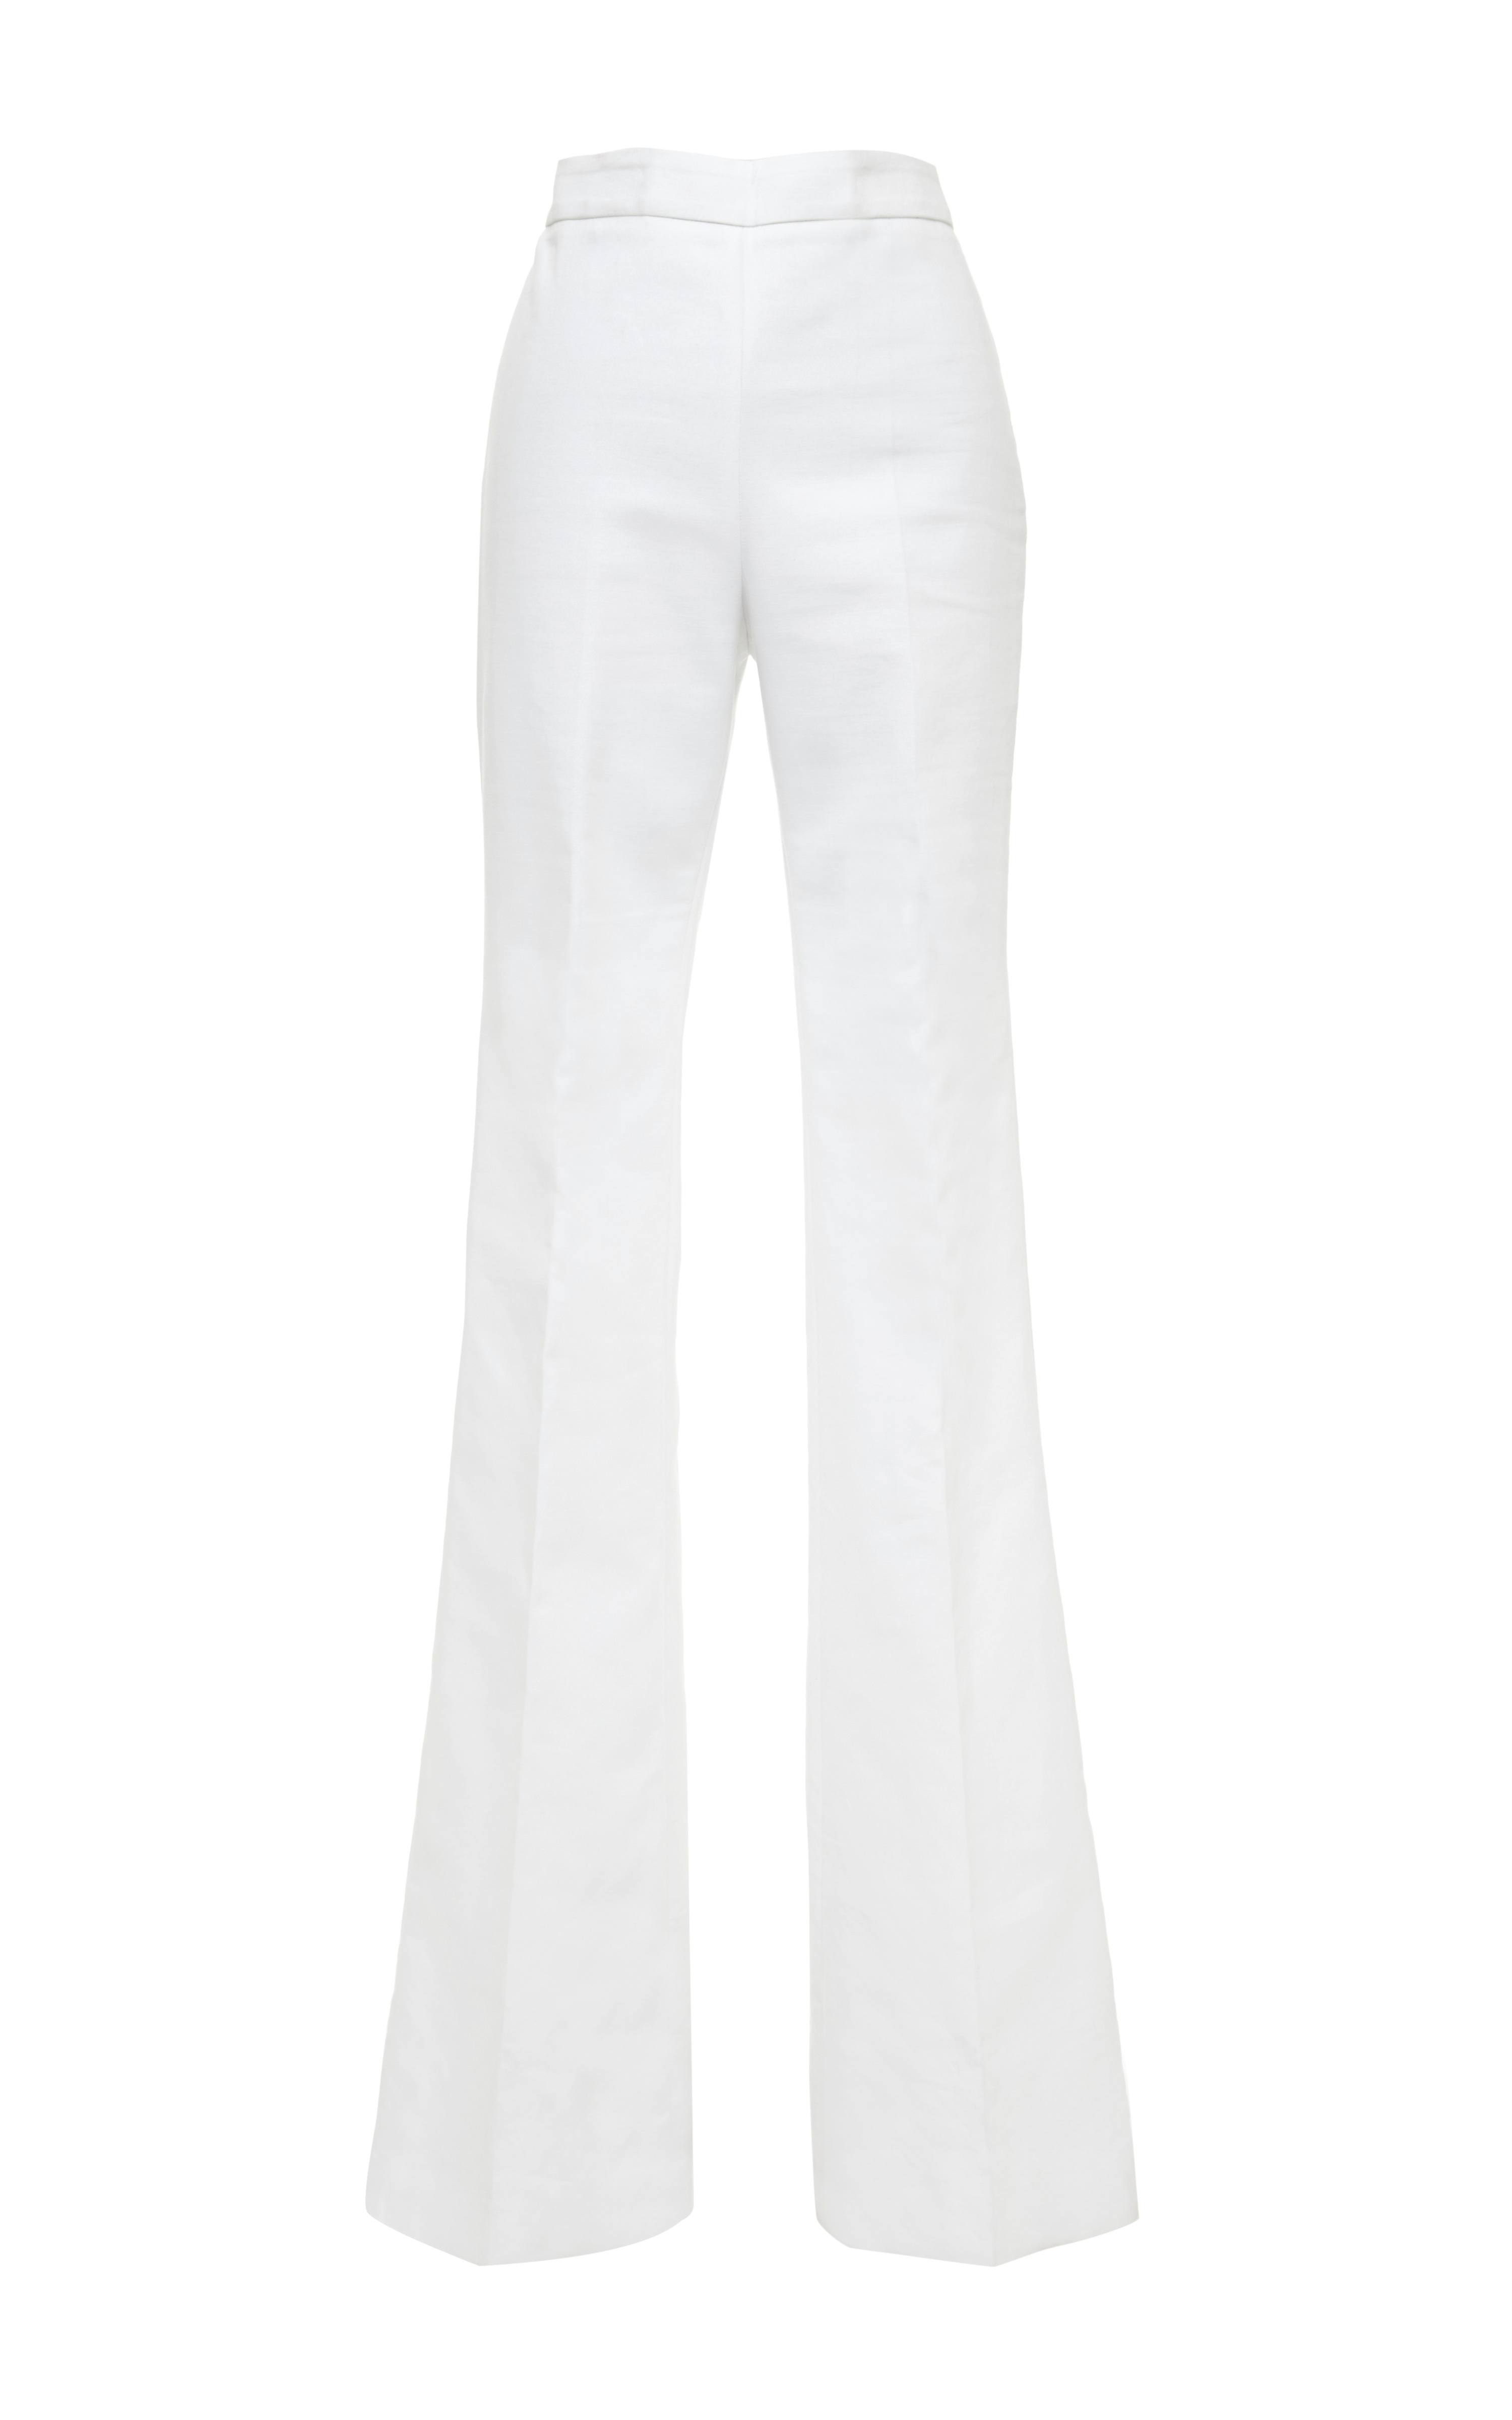 Lyst - Giambattista Valli Cotton Bell Bottom Pants in White